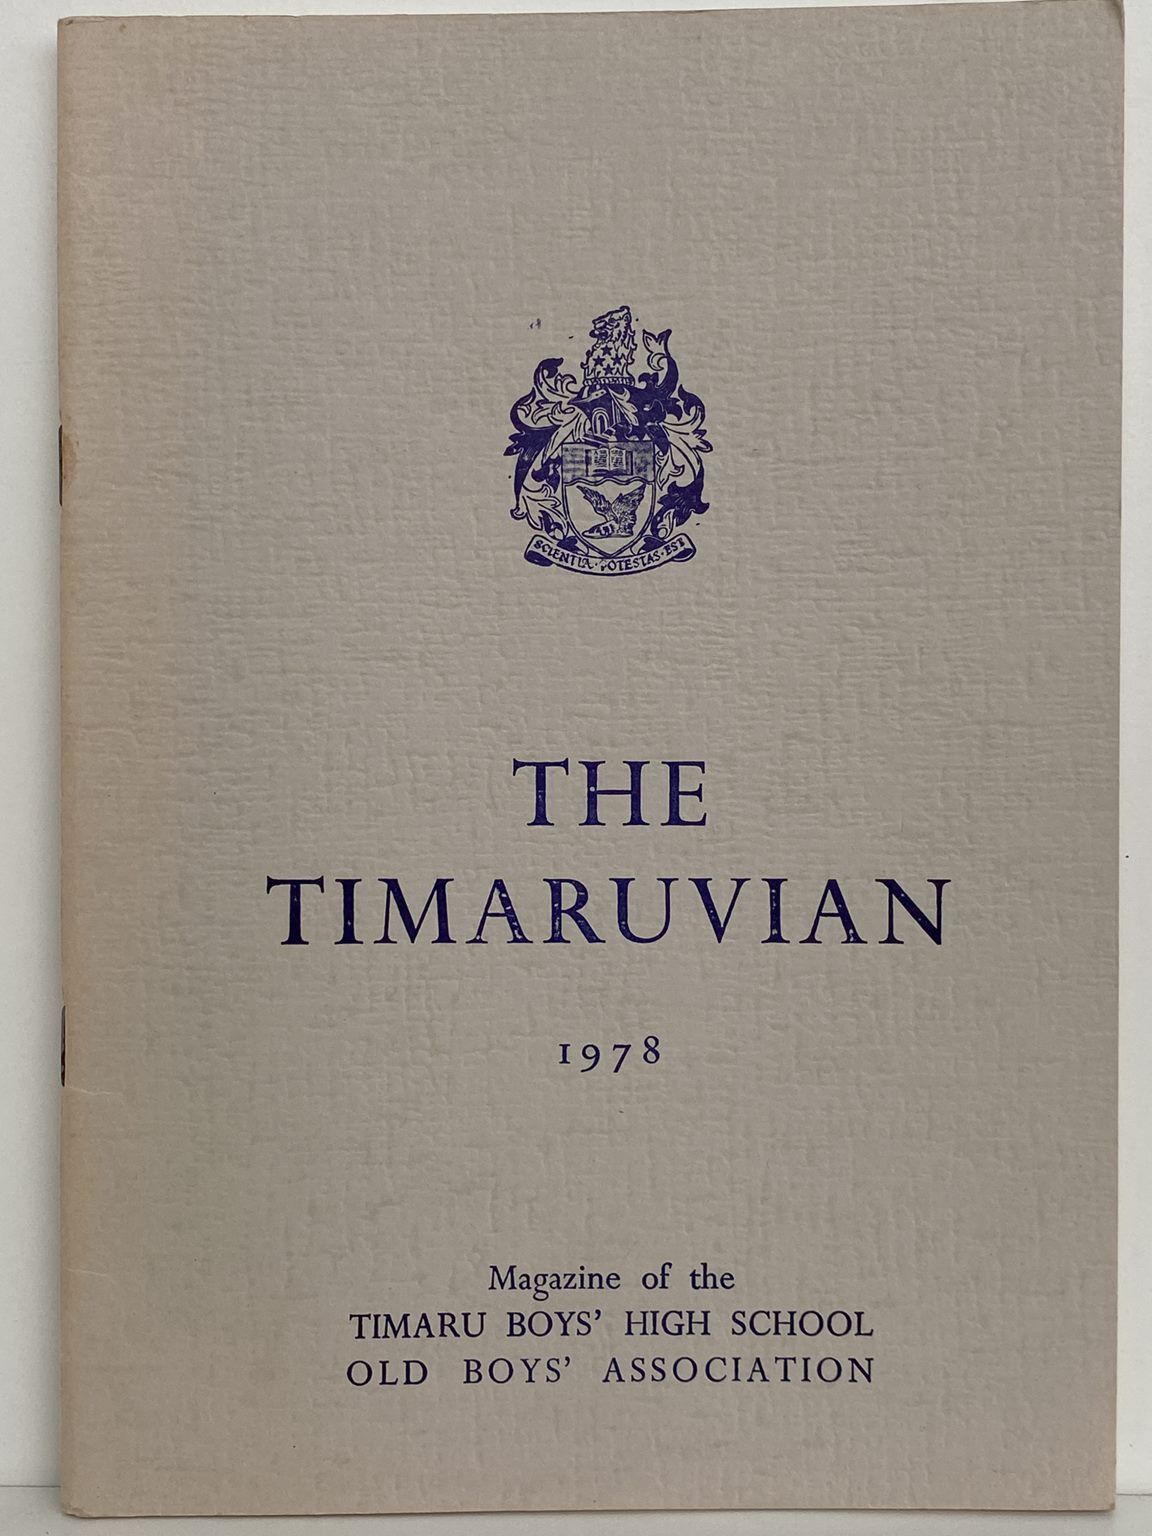 THE TIMARUVIAN: Magazine of the Timaru Boys' High School Old Boys' Association 1978